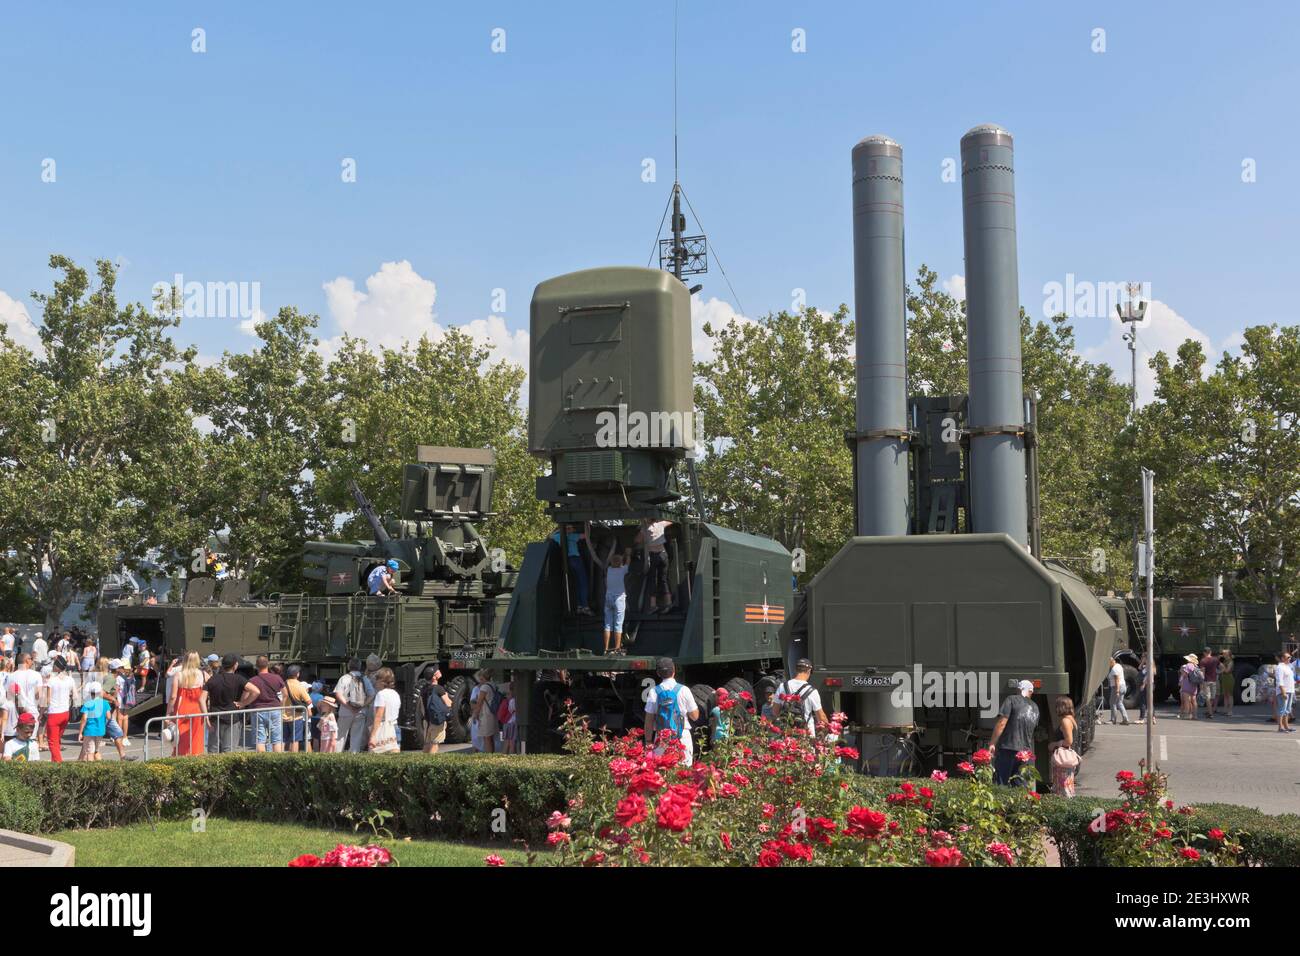 Sevastopol, Crimea, Russia - July 26, 2020: Exhibition of military equipment on Navy Day on Nakhimov Square in the city of Sevastopol, Crimea Stock Photo